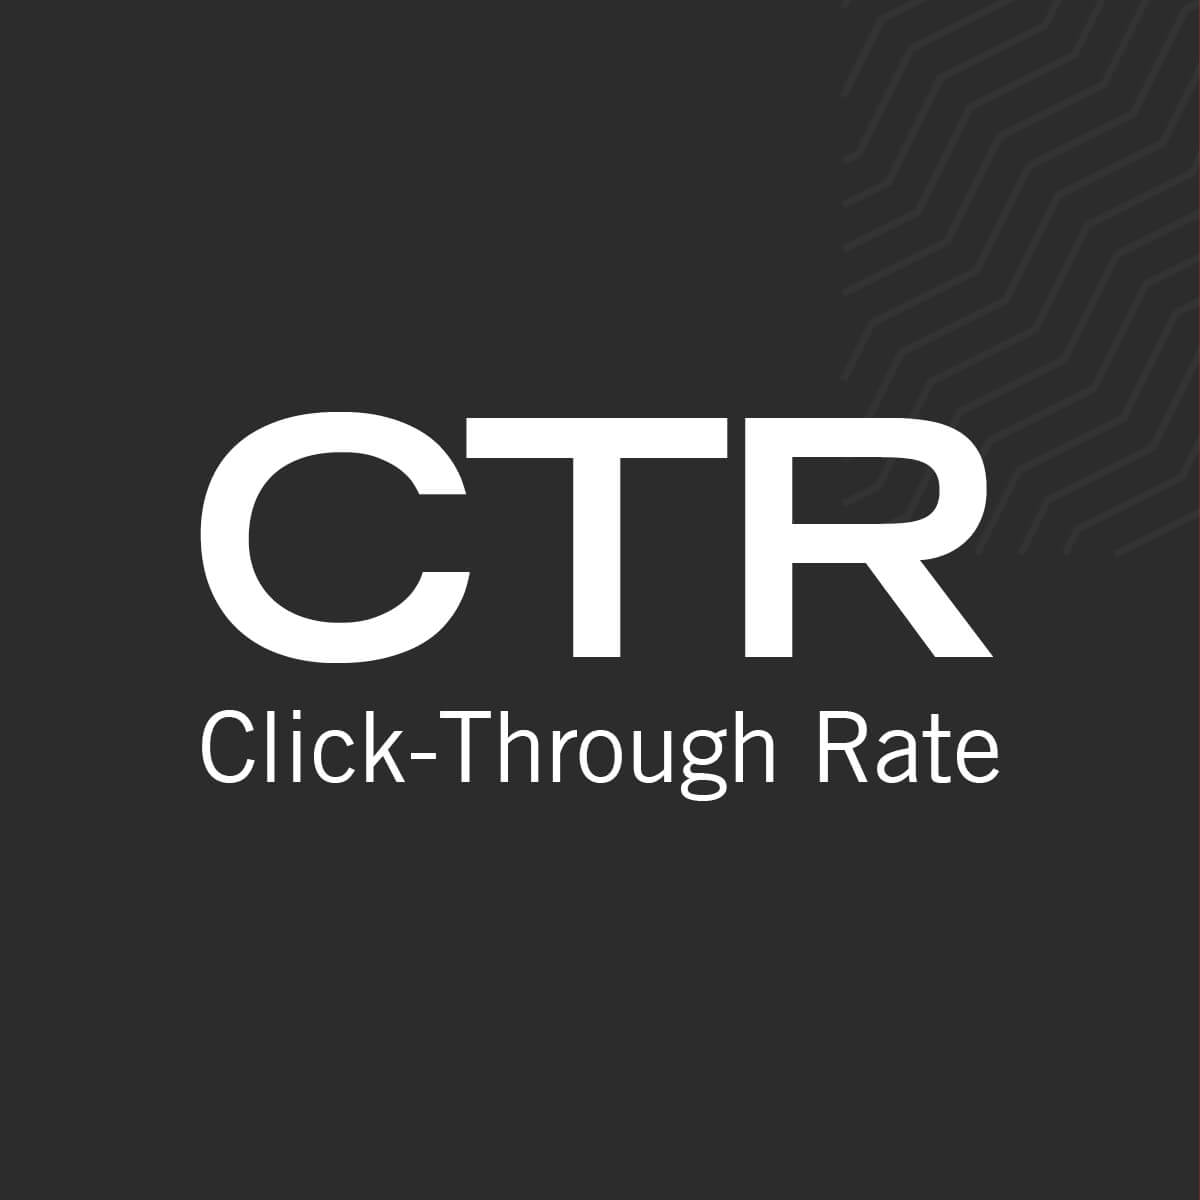 CTR Click-Through Rate